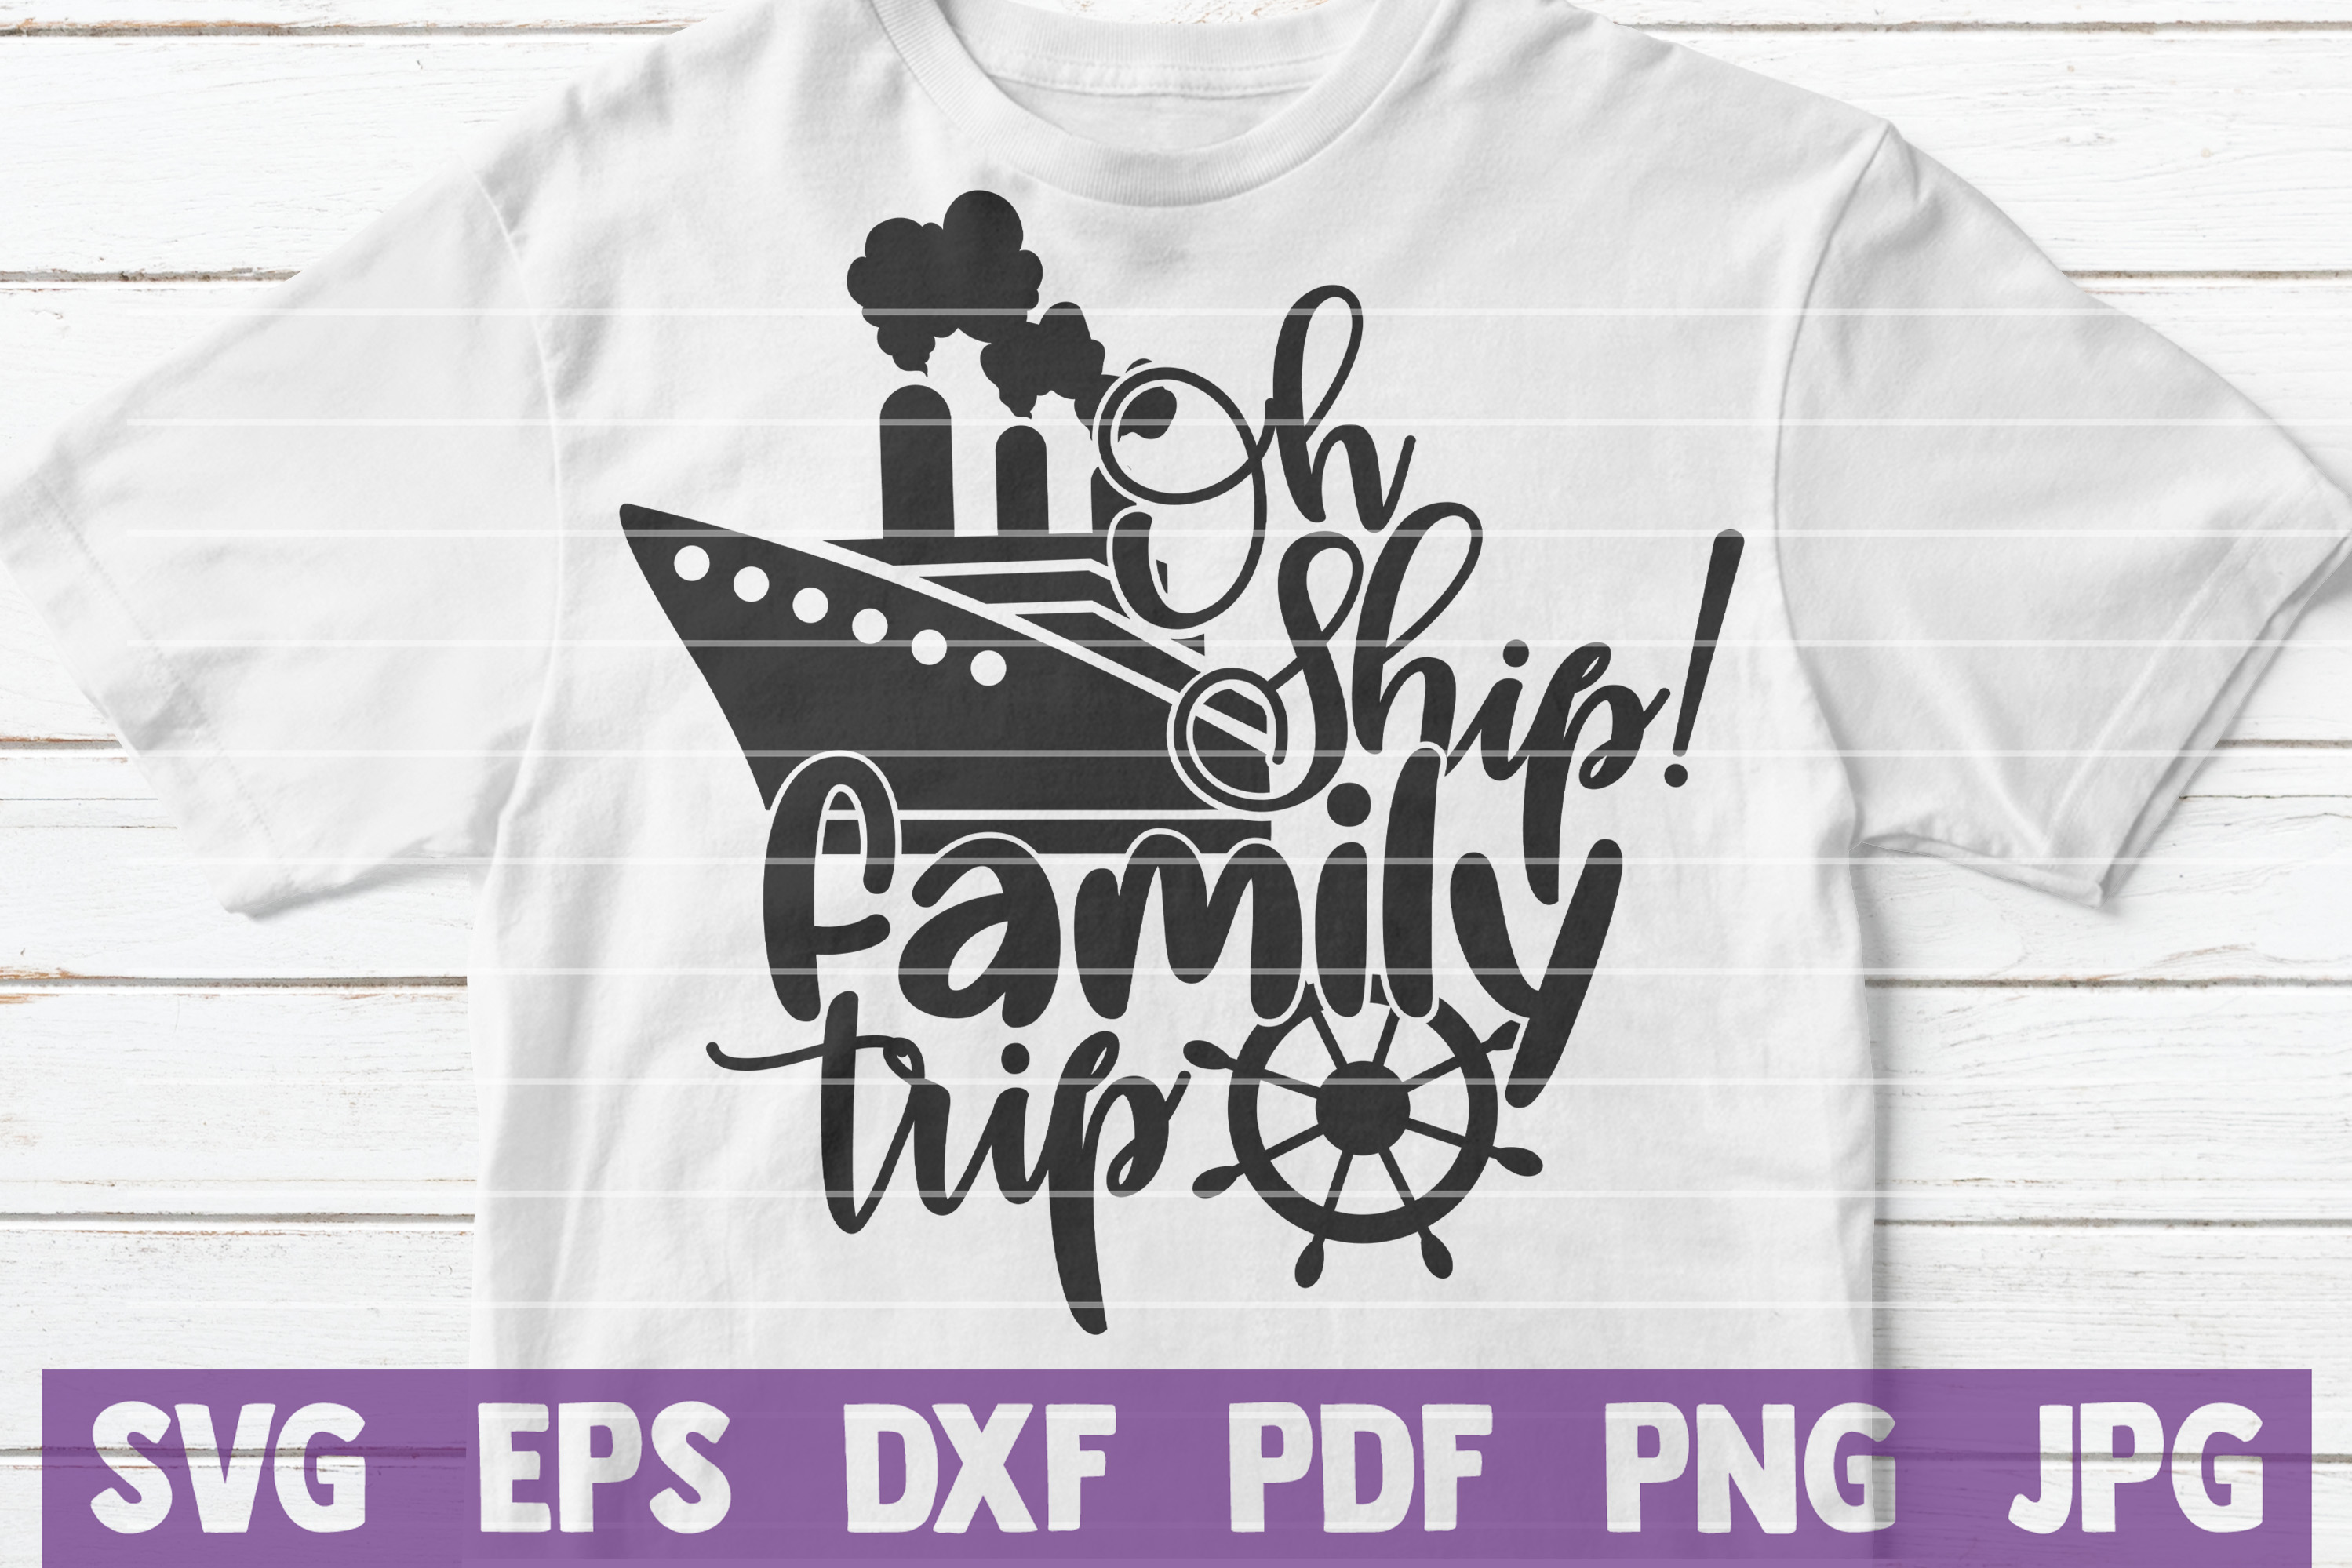 Oh Ship Family Trip SVG cut file (231132) | Cut Files | Design Bundles